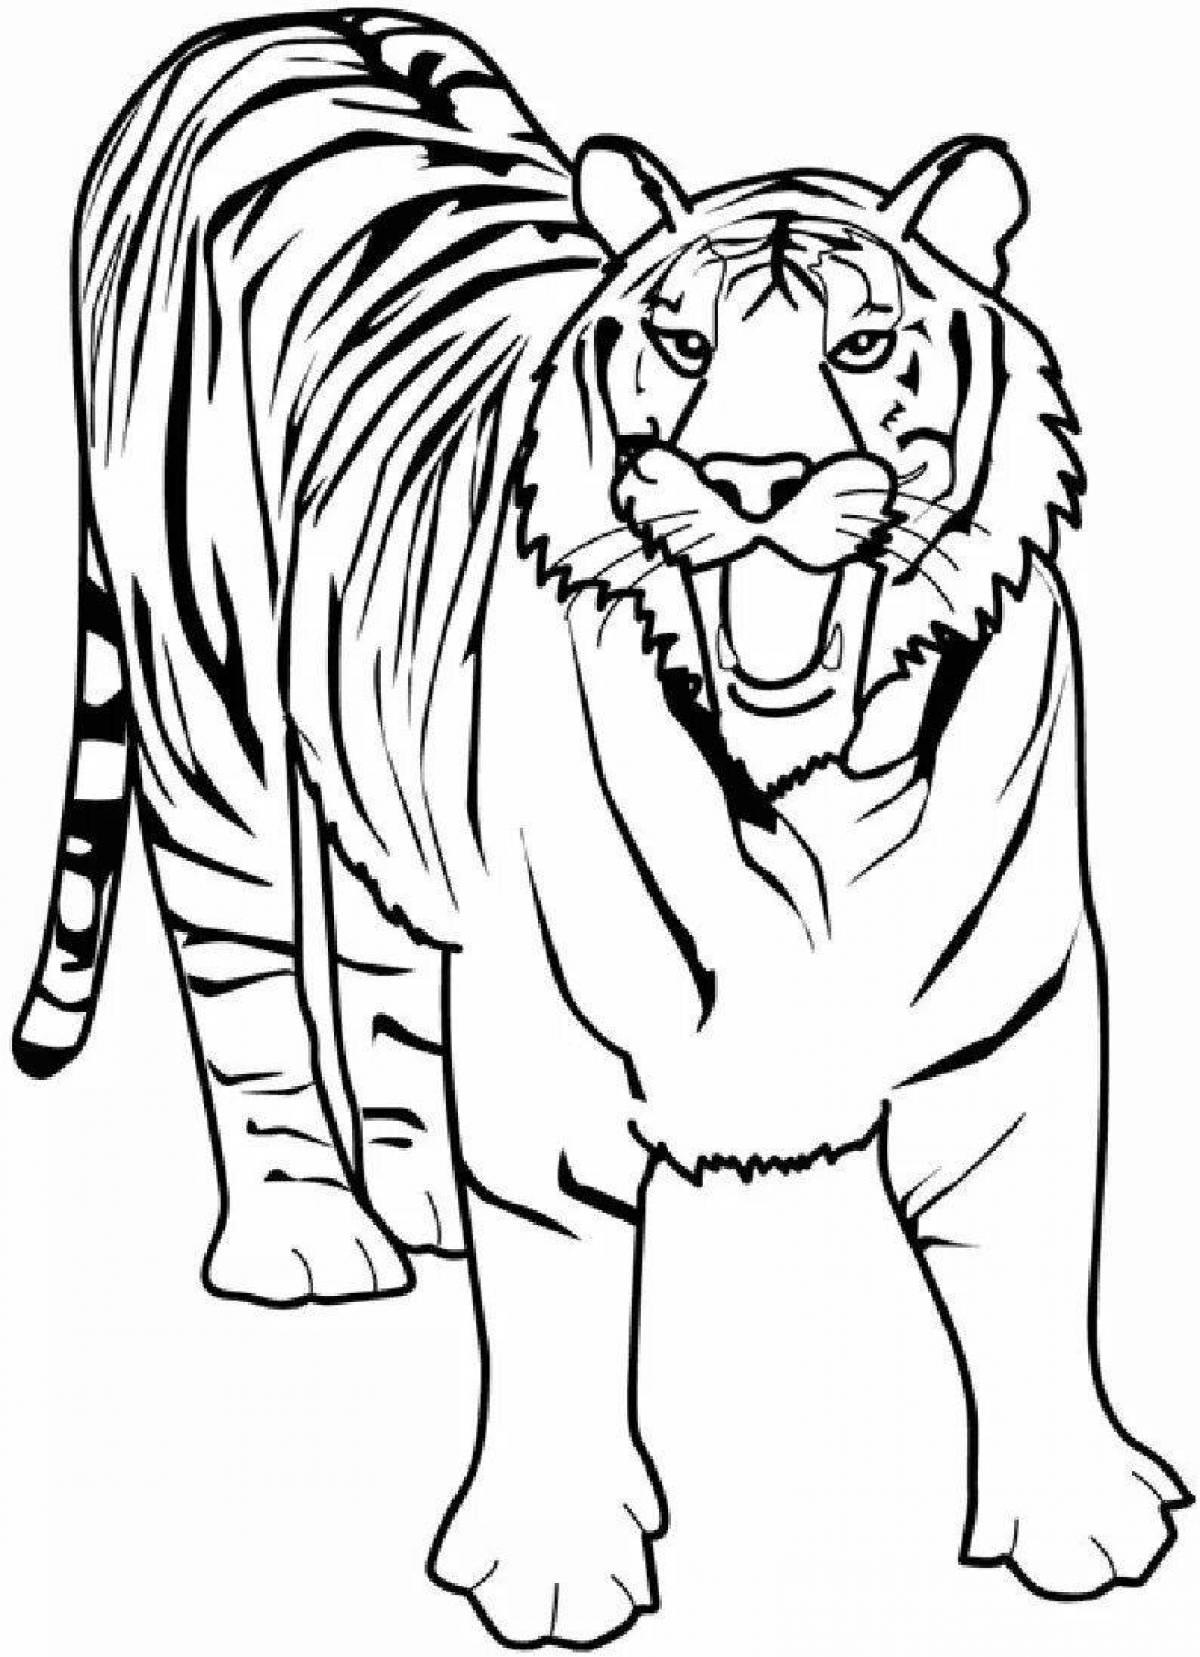 Уссурийский тигр #9